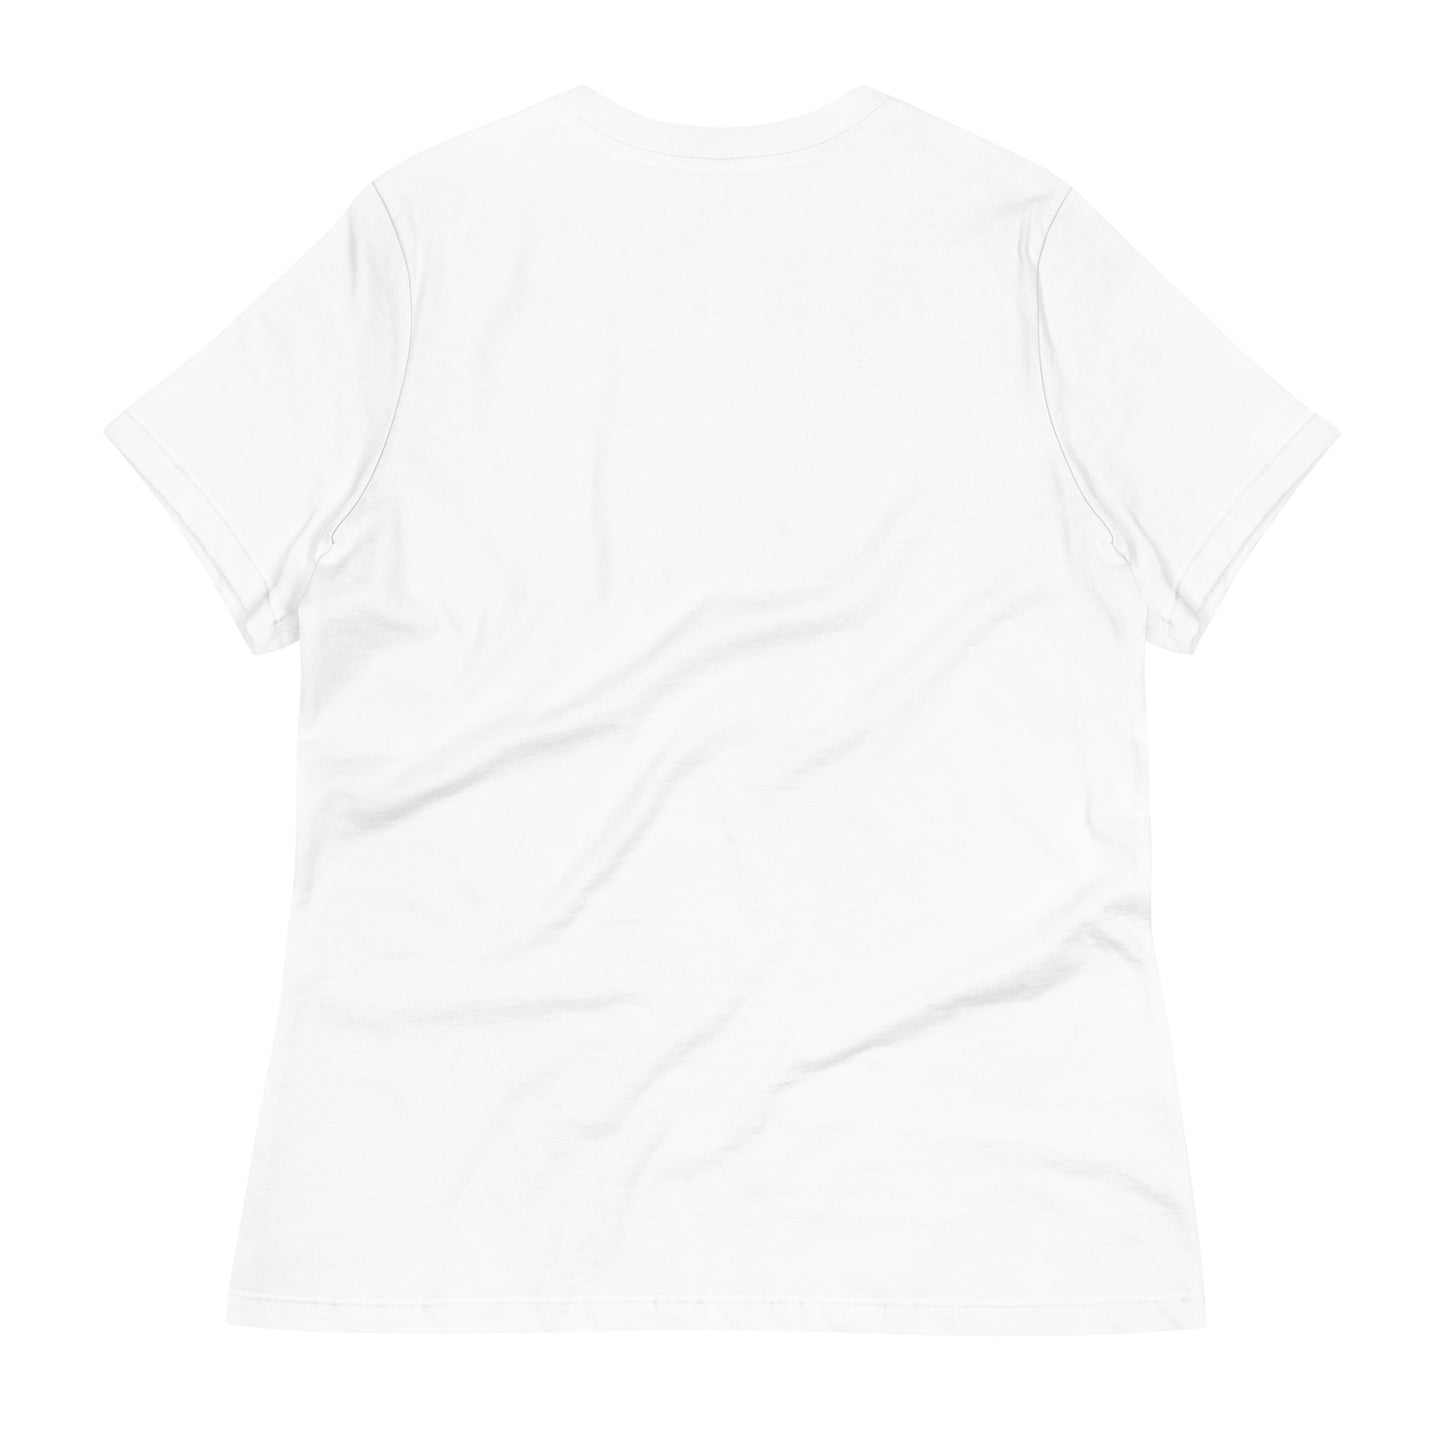 Coastal Sunset Whale Cotton T-Shirt | Womens